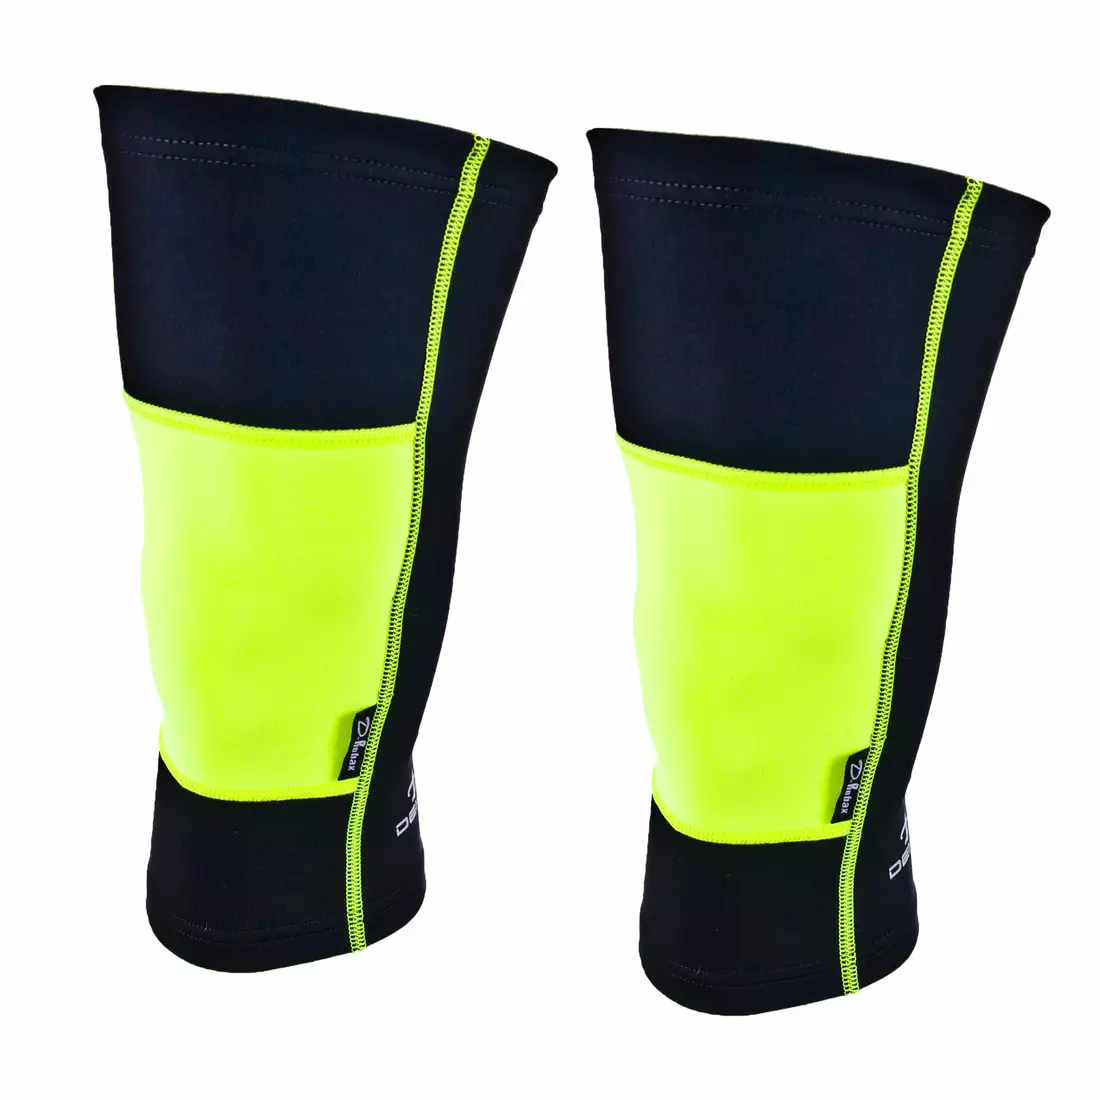 DEKO DUAL D-ROBAX insulated bicycle knee pads, black and fluorine